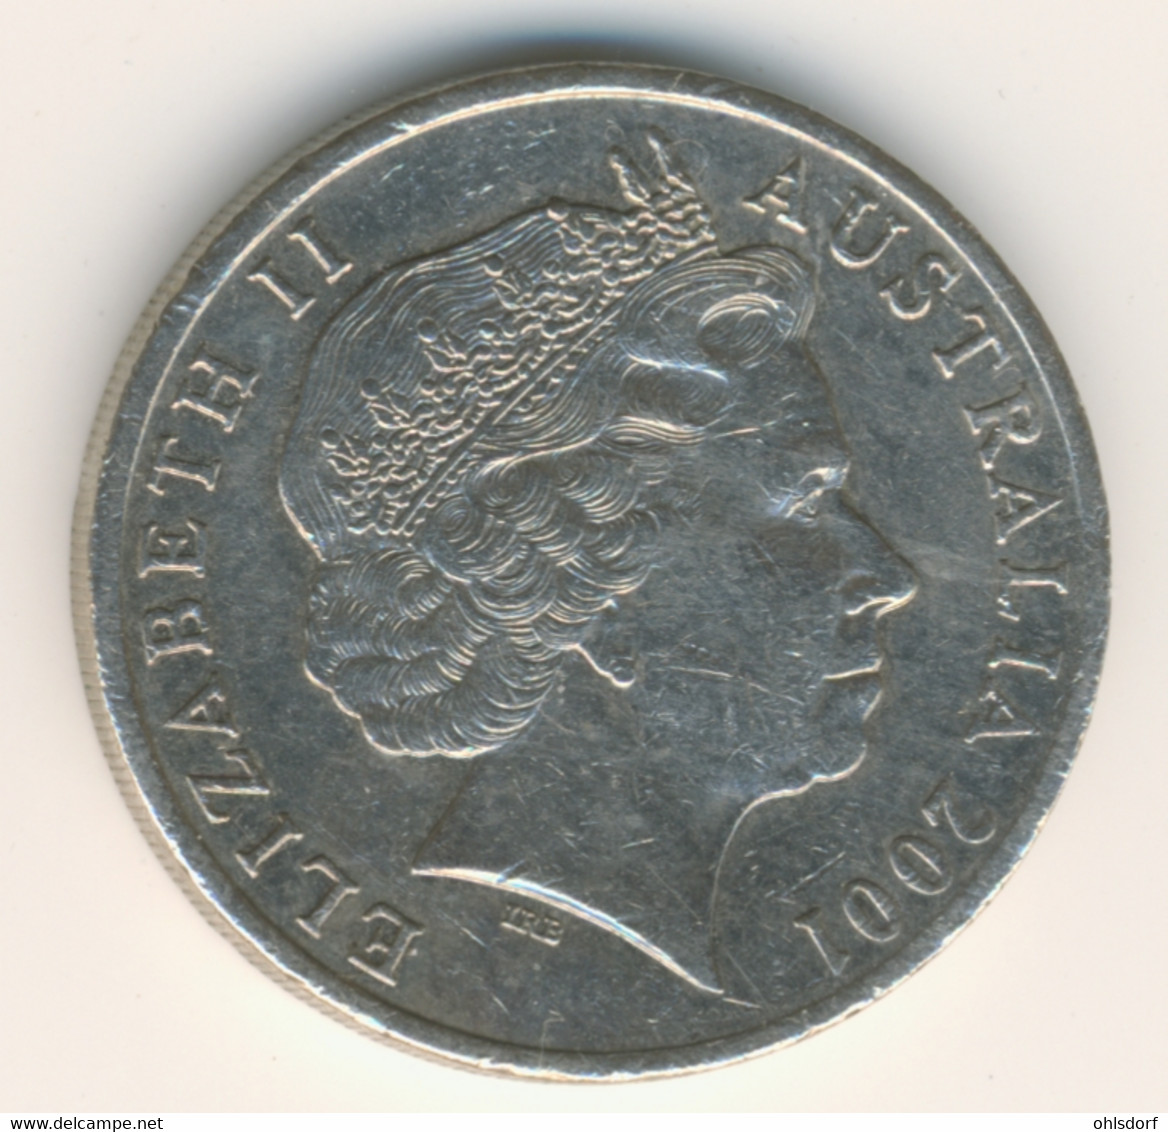 AUSTRALIA 2001: 20 Cents, KM 403 - 20 Cents